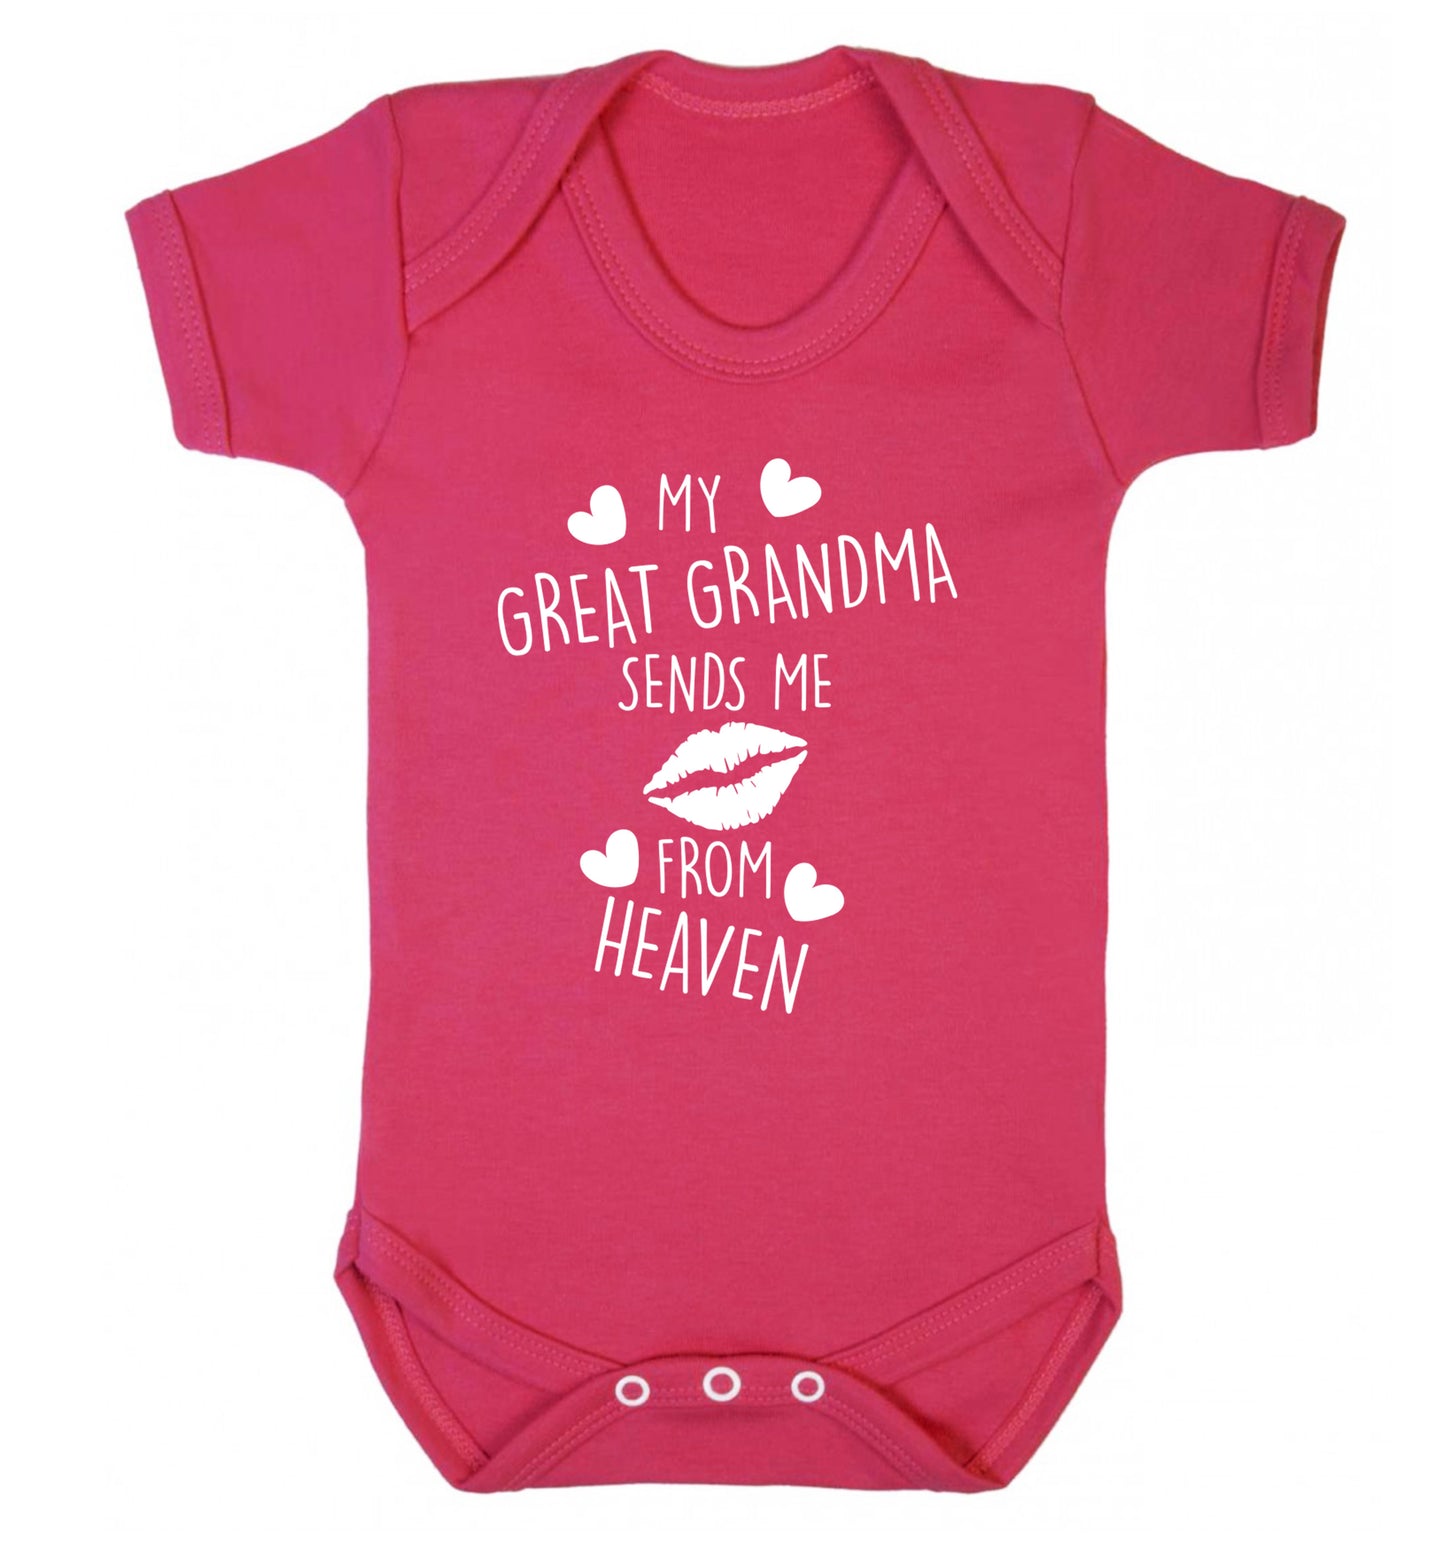 My great grandma sends me kisses from heaven Baby Vest dark pink 18-24 months